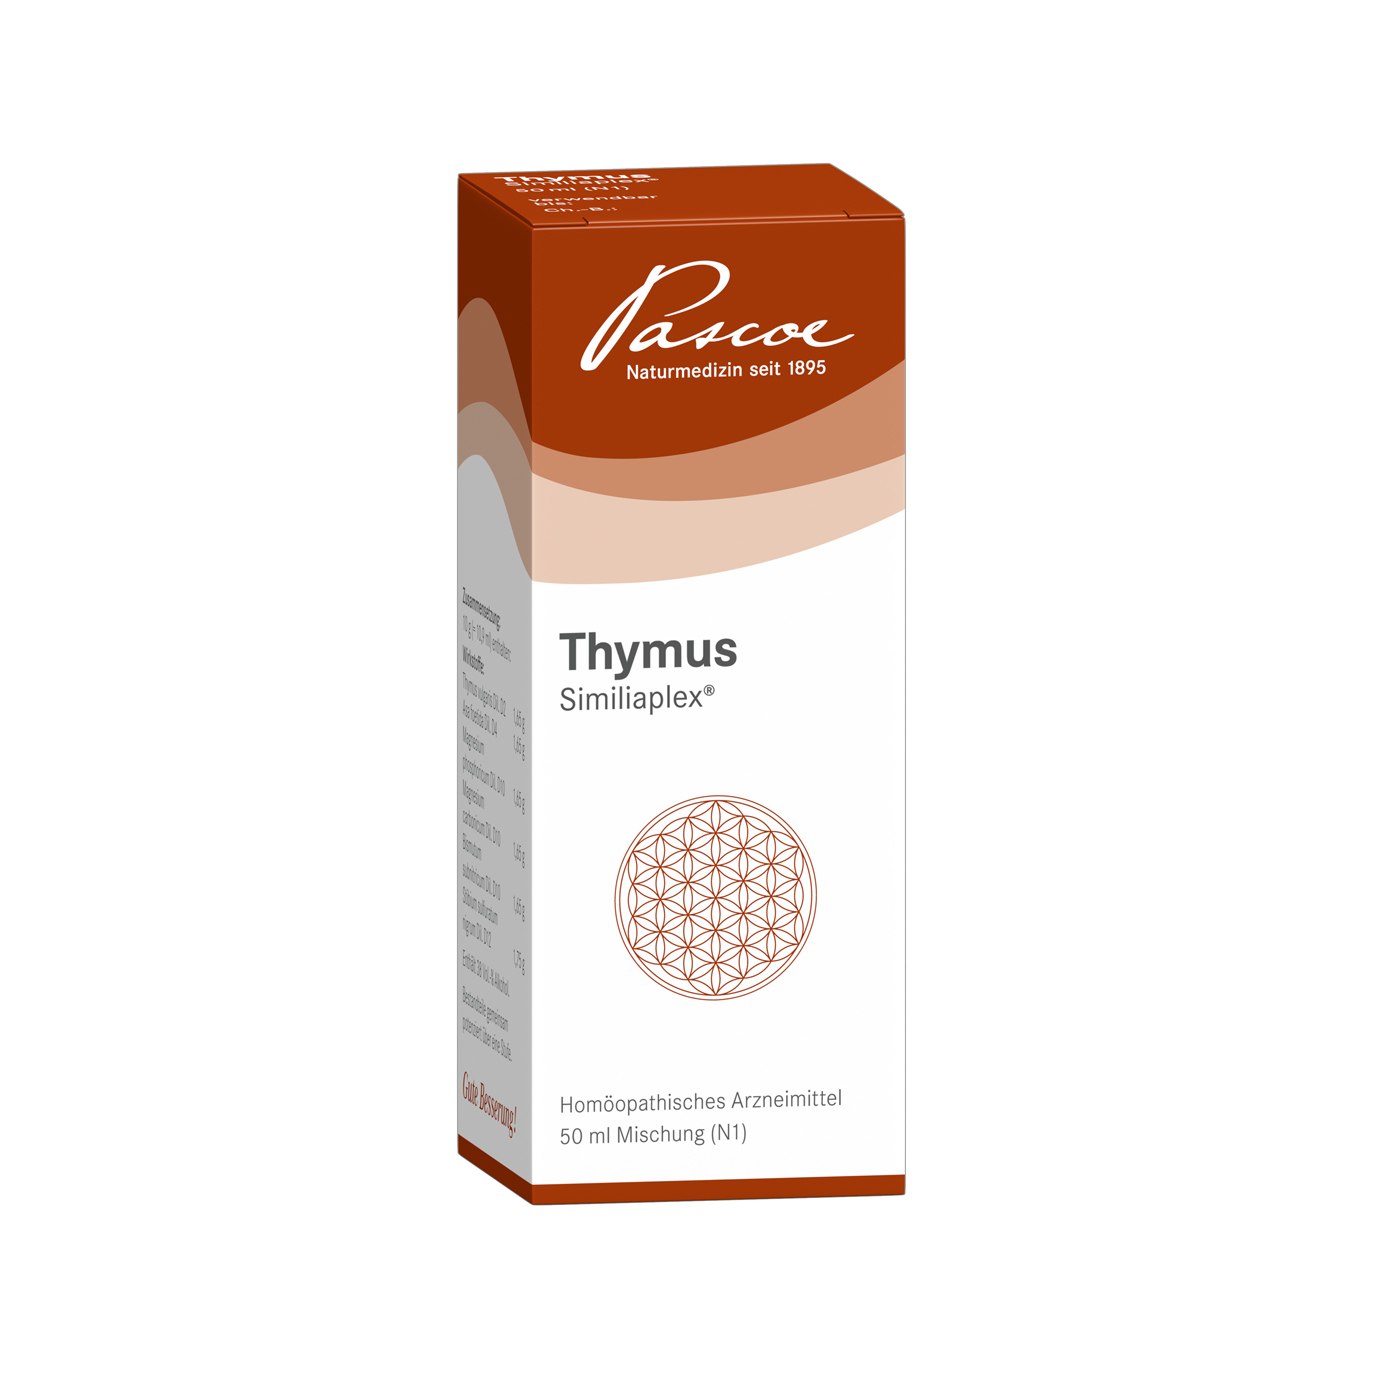 Thymus Similiaplex 50 ml Packshot PZN 01354970